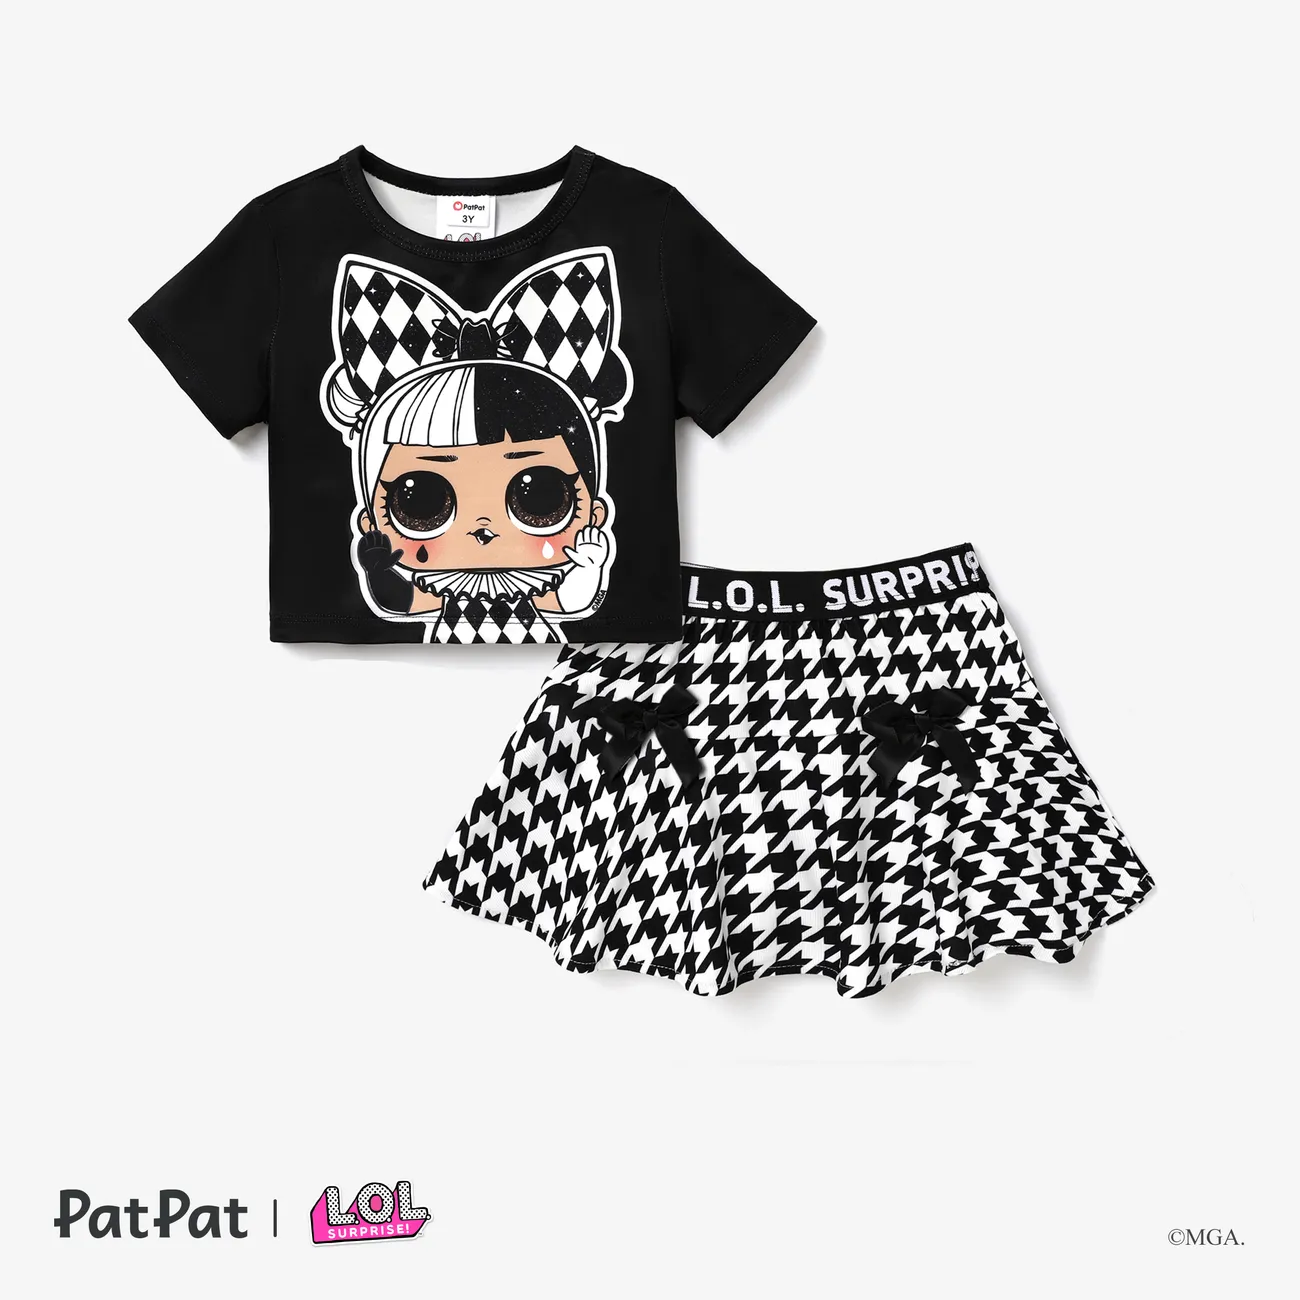 L.O.L. SURPRISE! Toddler Girl/Kid Girl Graphic Print Short-sleeve Tee and Skirt BlackandWhite big image 1